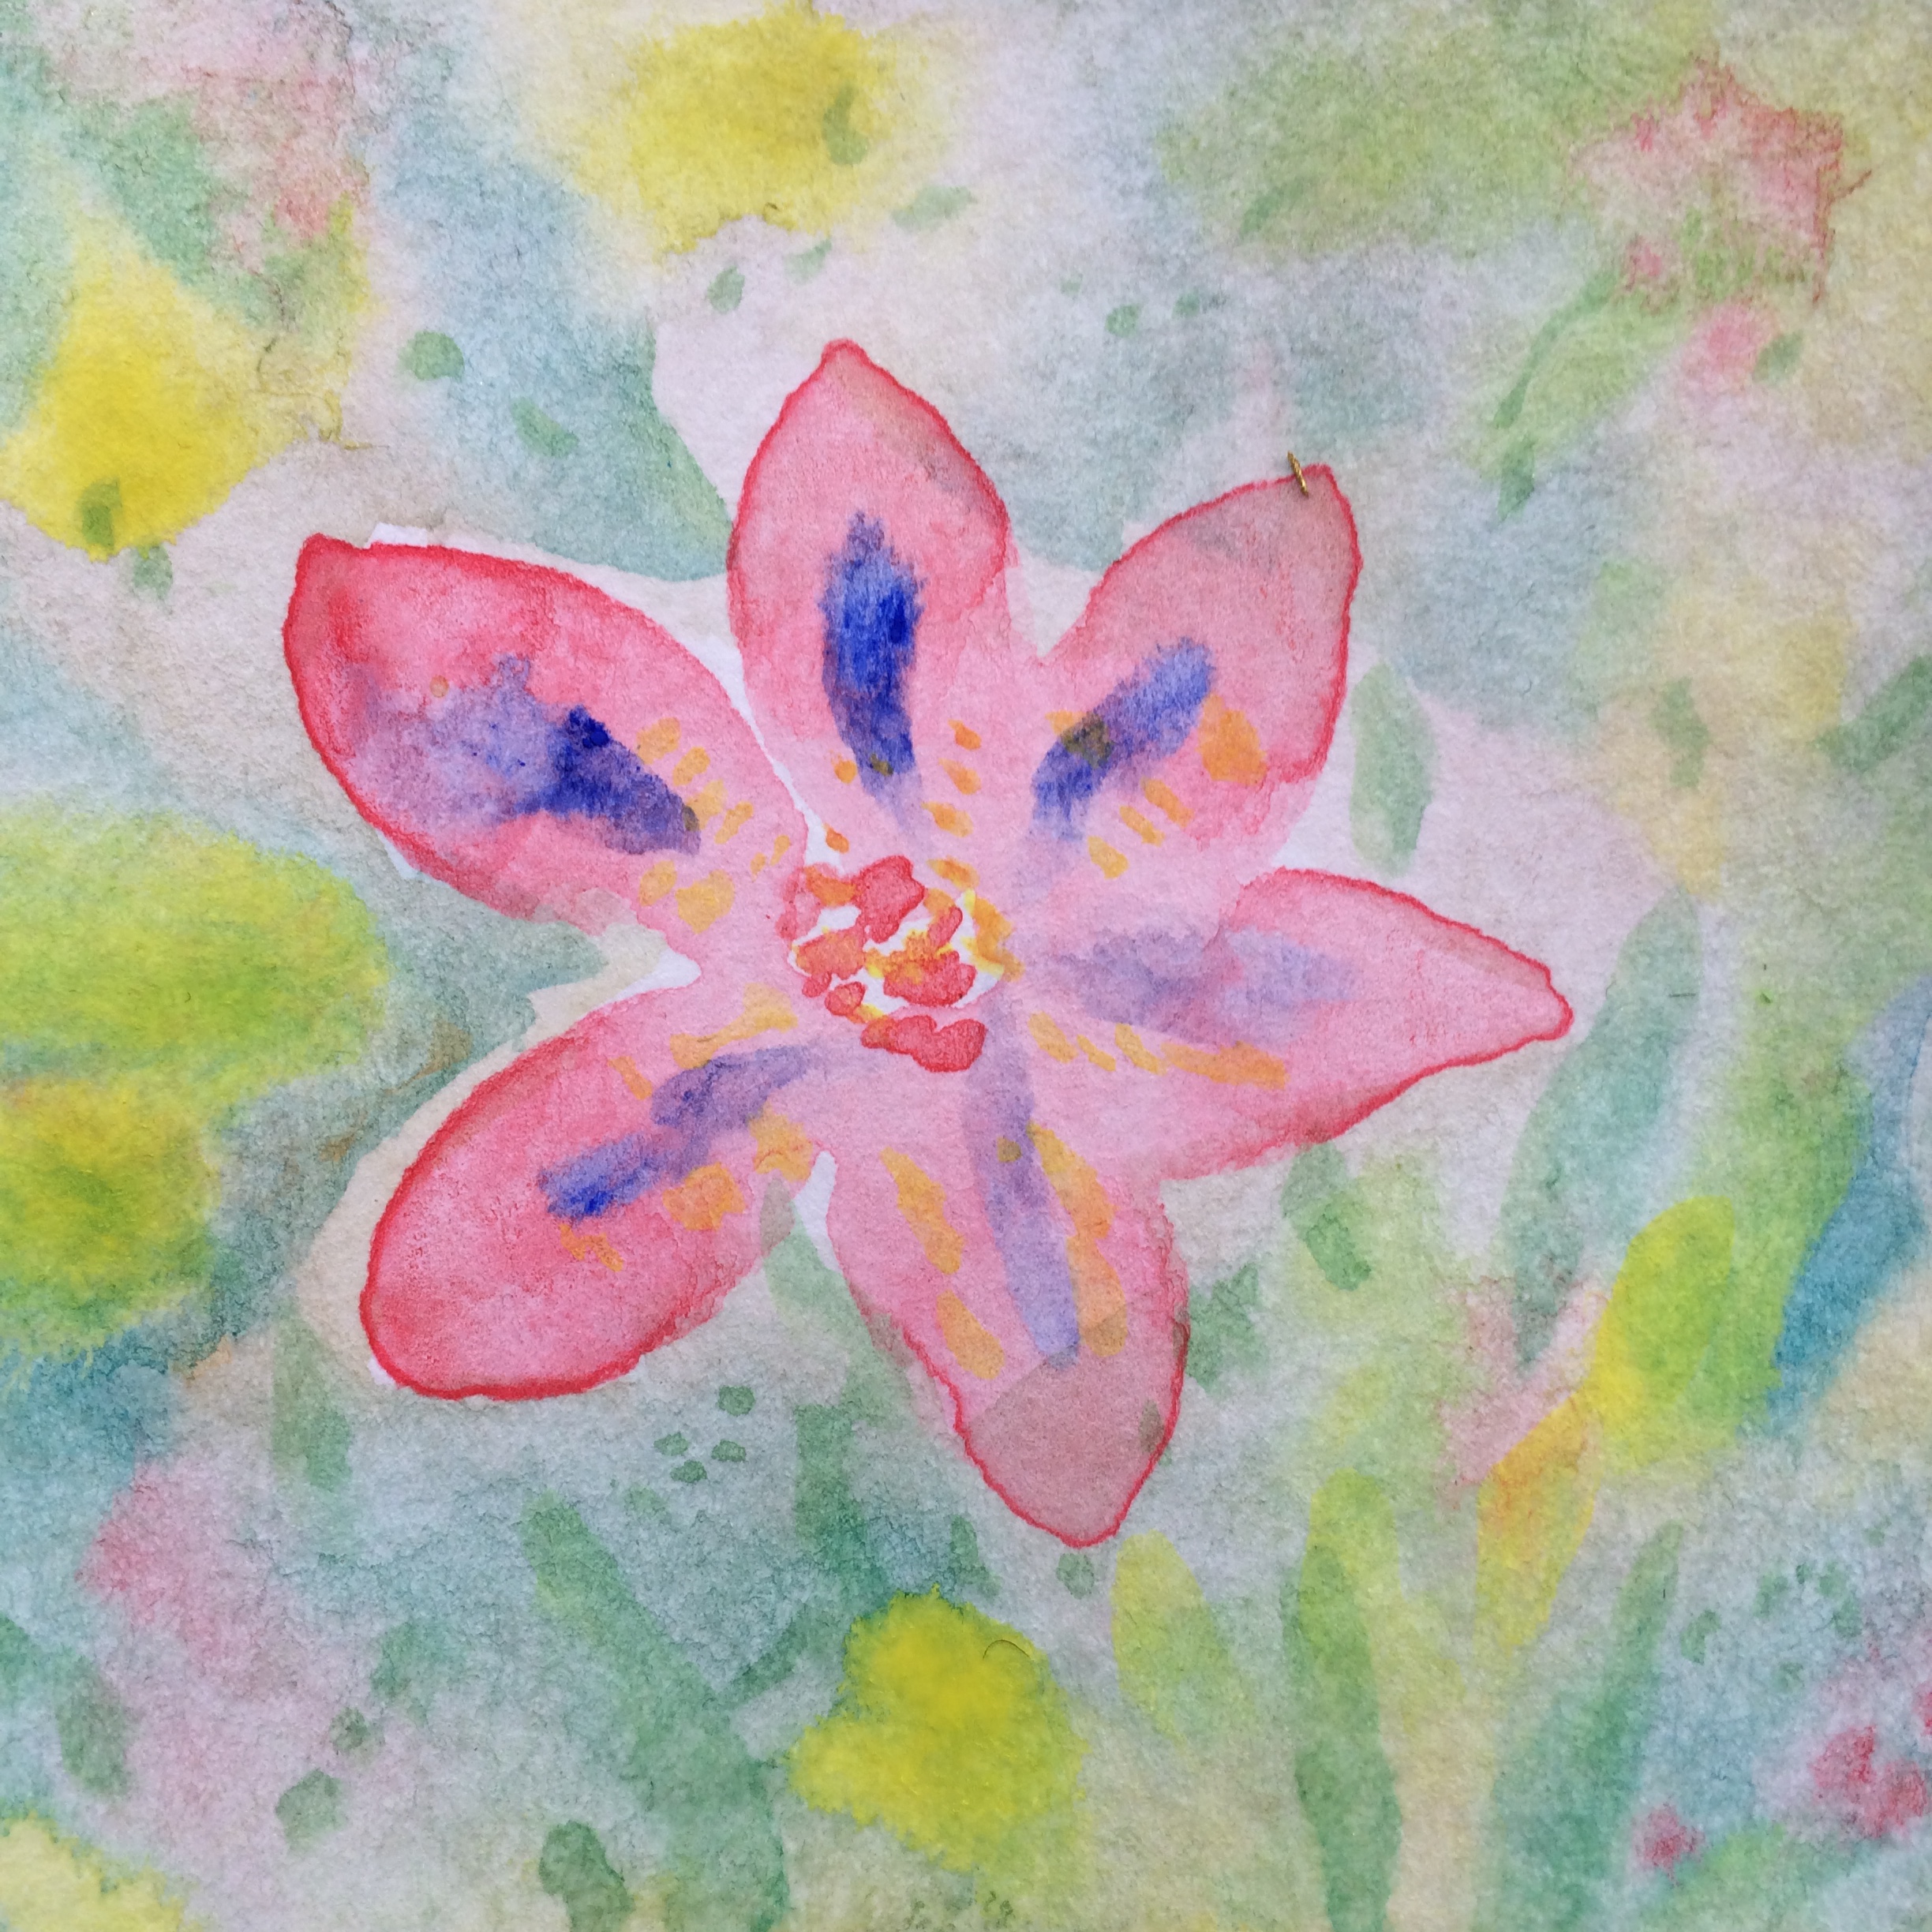 Watercolor flower